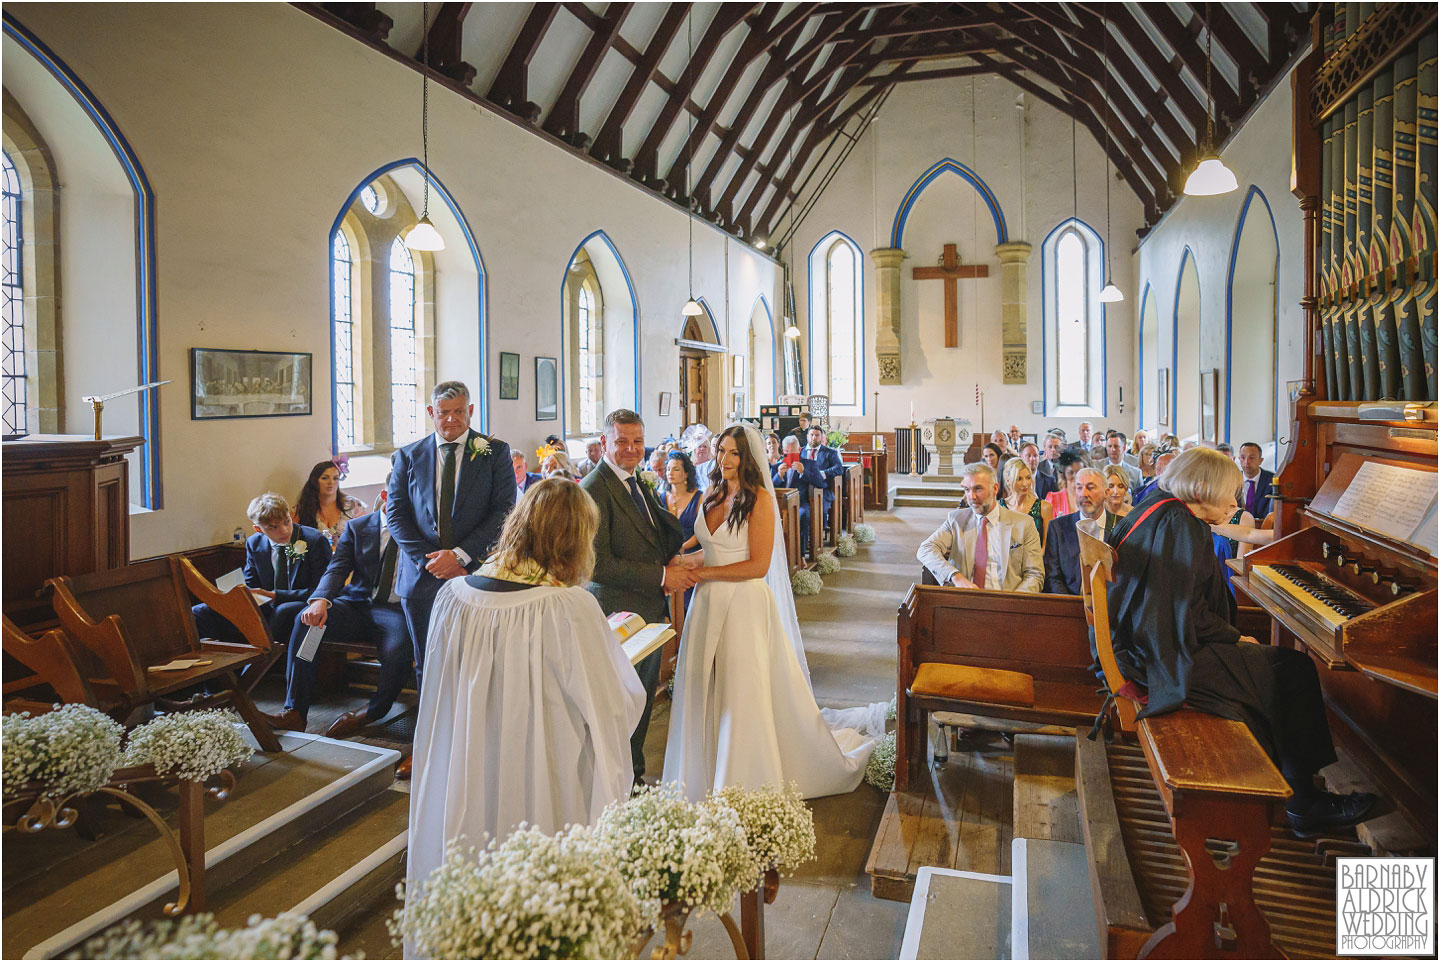 Wedding ceremony at St Saviours Church Harome Yorkshire